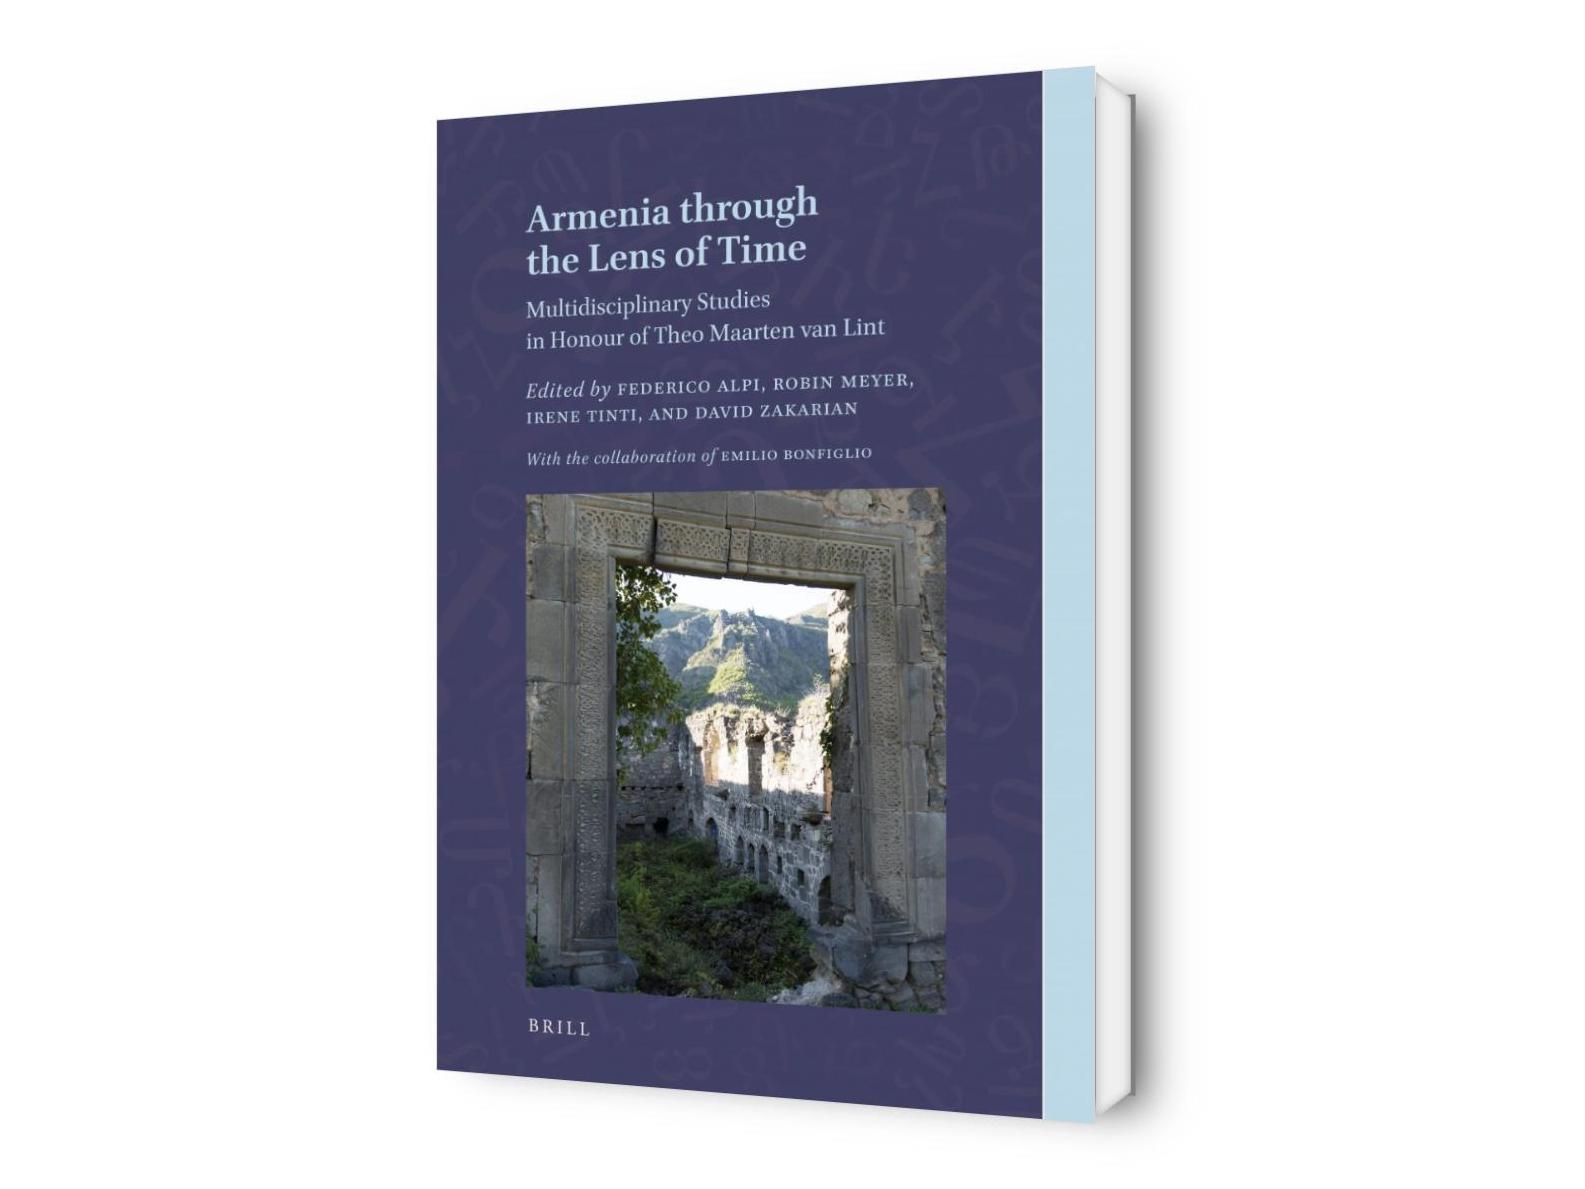 Armenia through the Lens of Time. Multidisciplinary Studies in Honour of Theo Maarten van Lint